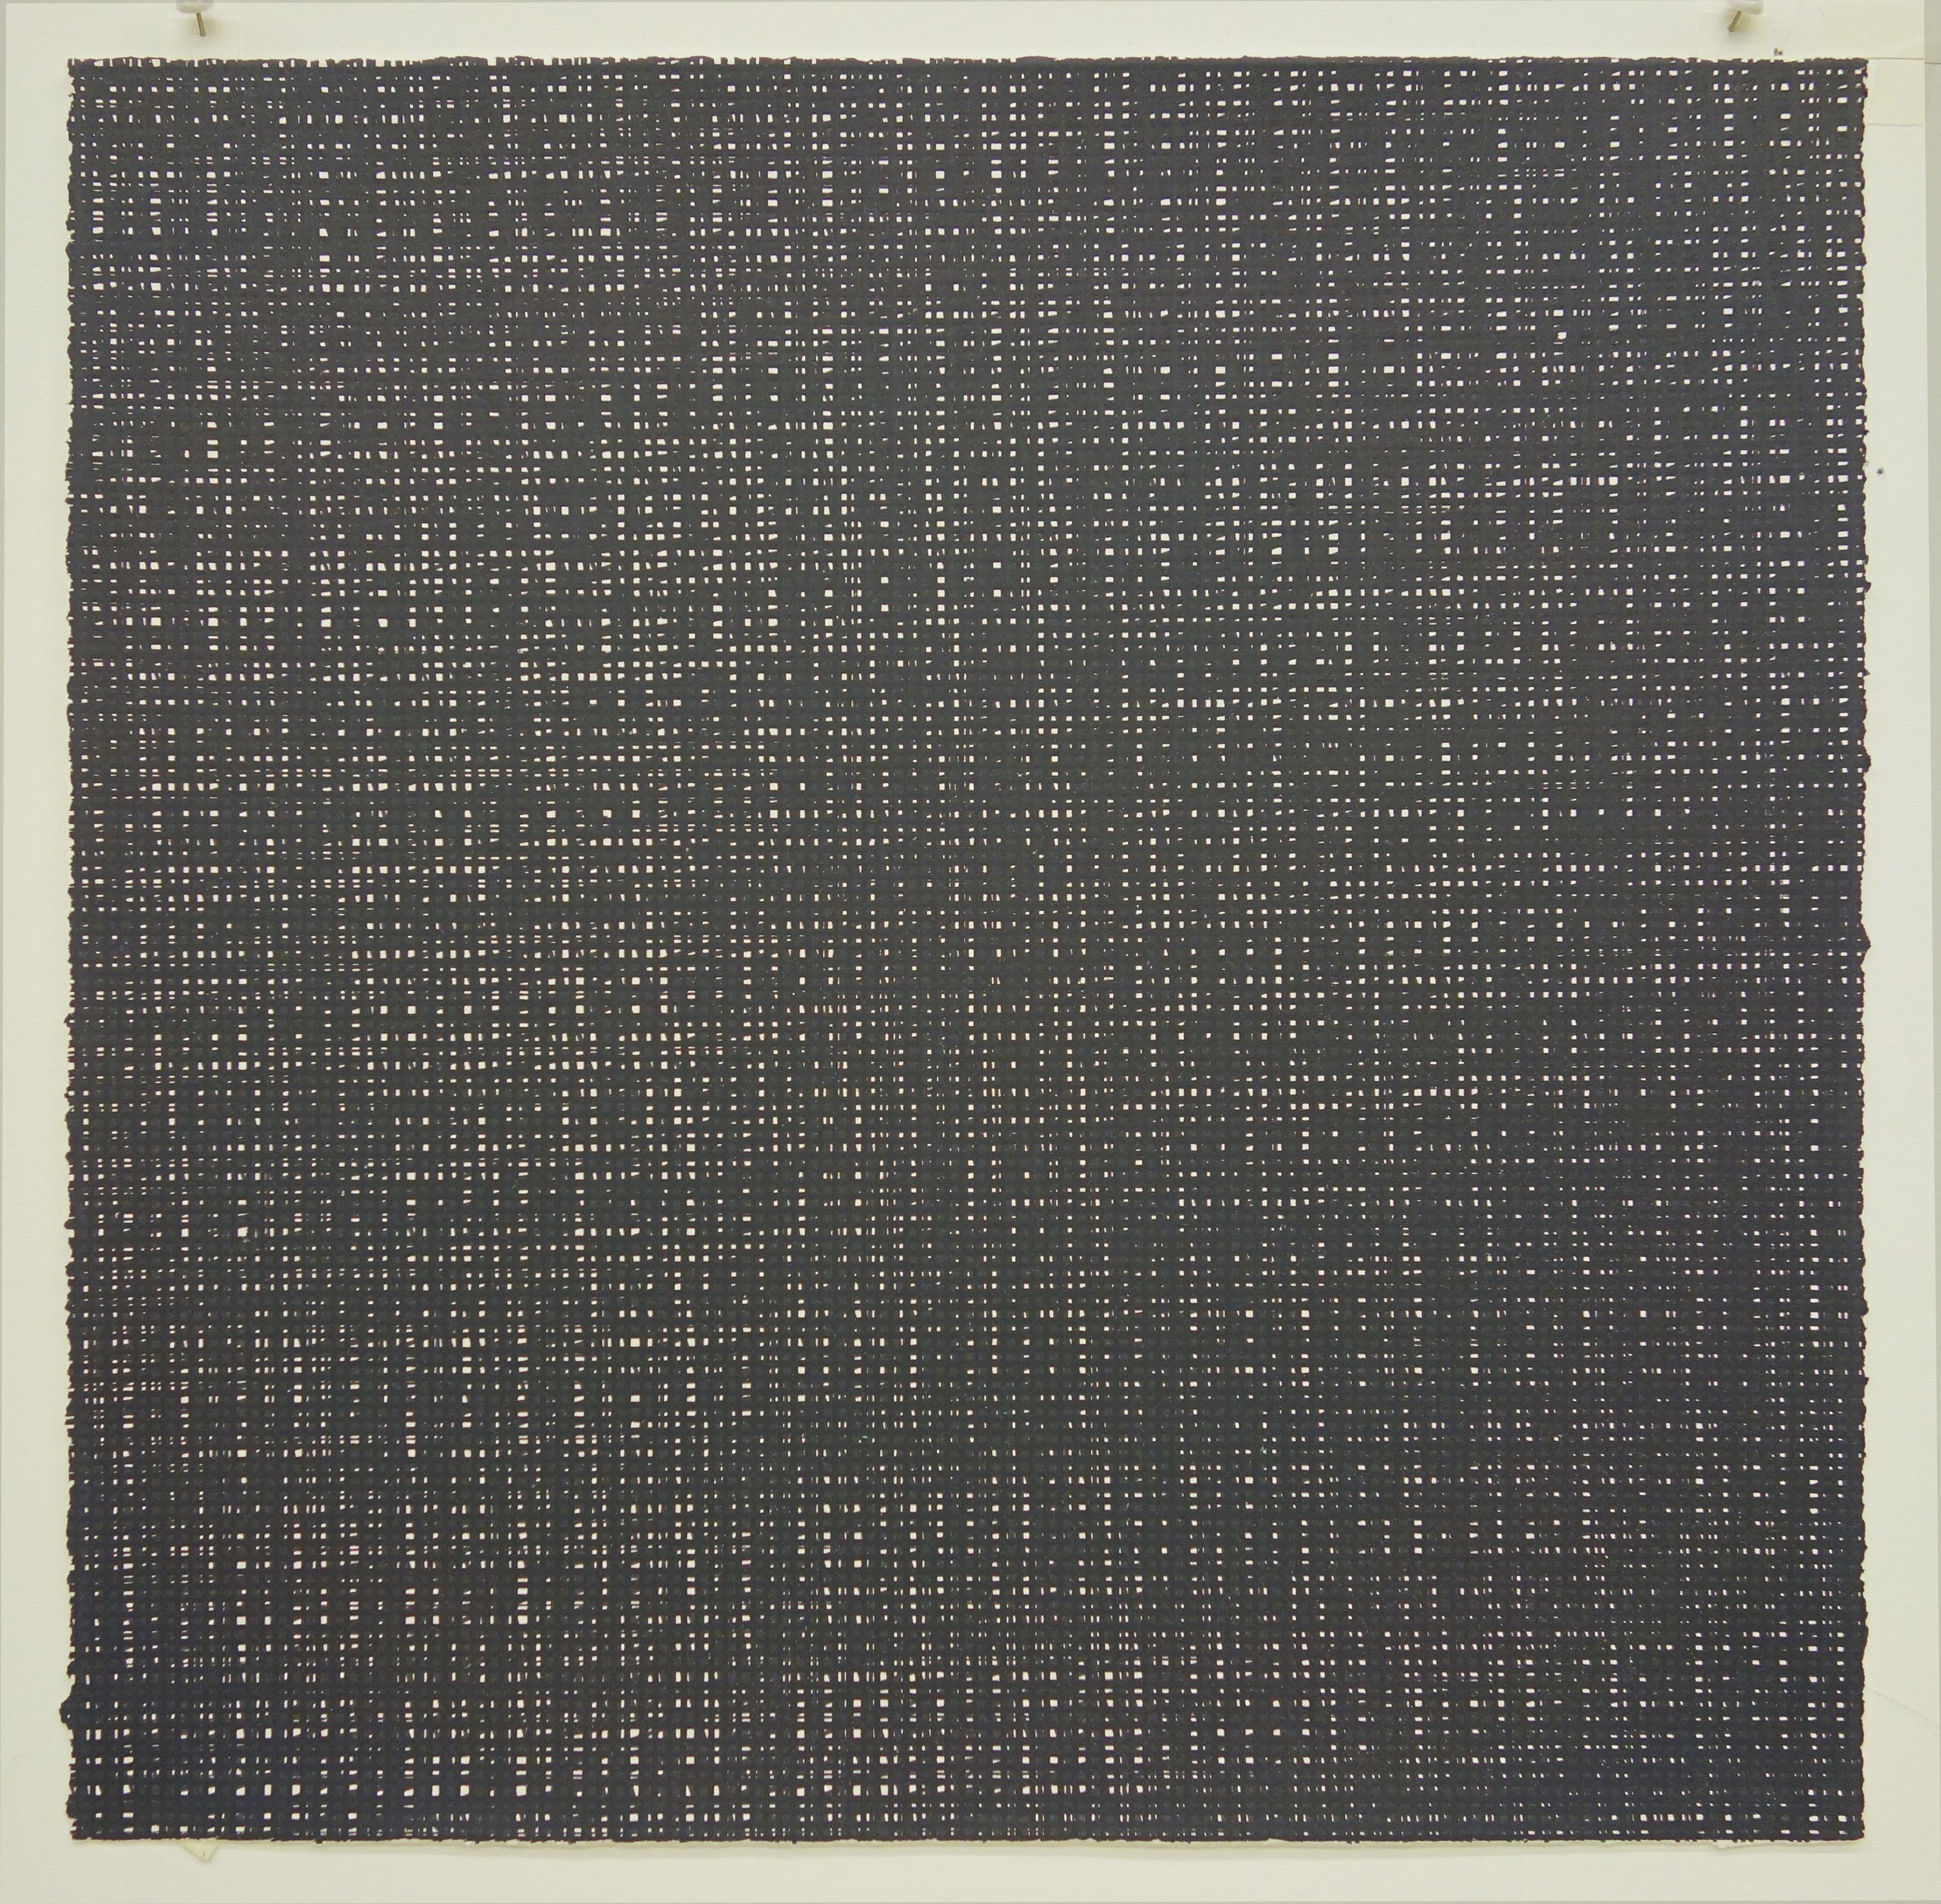 Rob de Oude, Untitled-Wassaic 10, 2016, silkscreen, 18 x 18 inches, Suite of 10 5